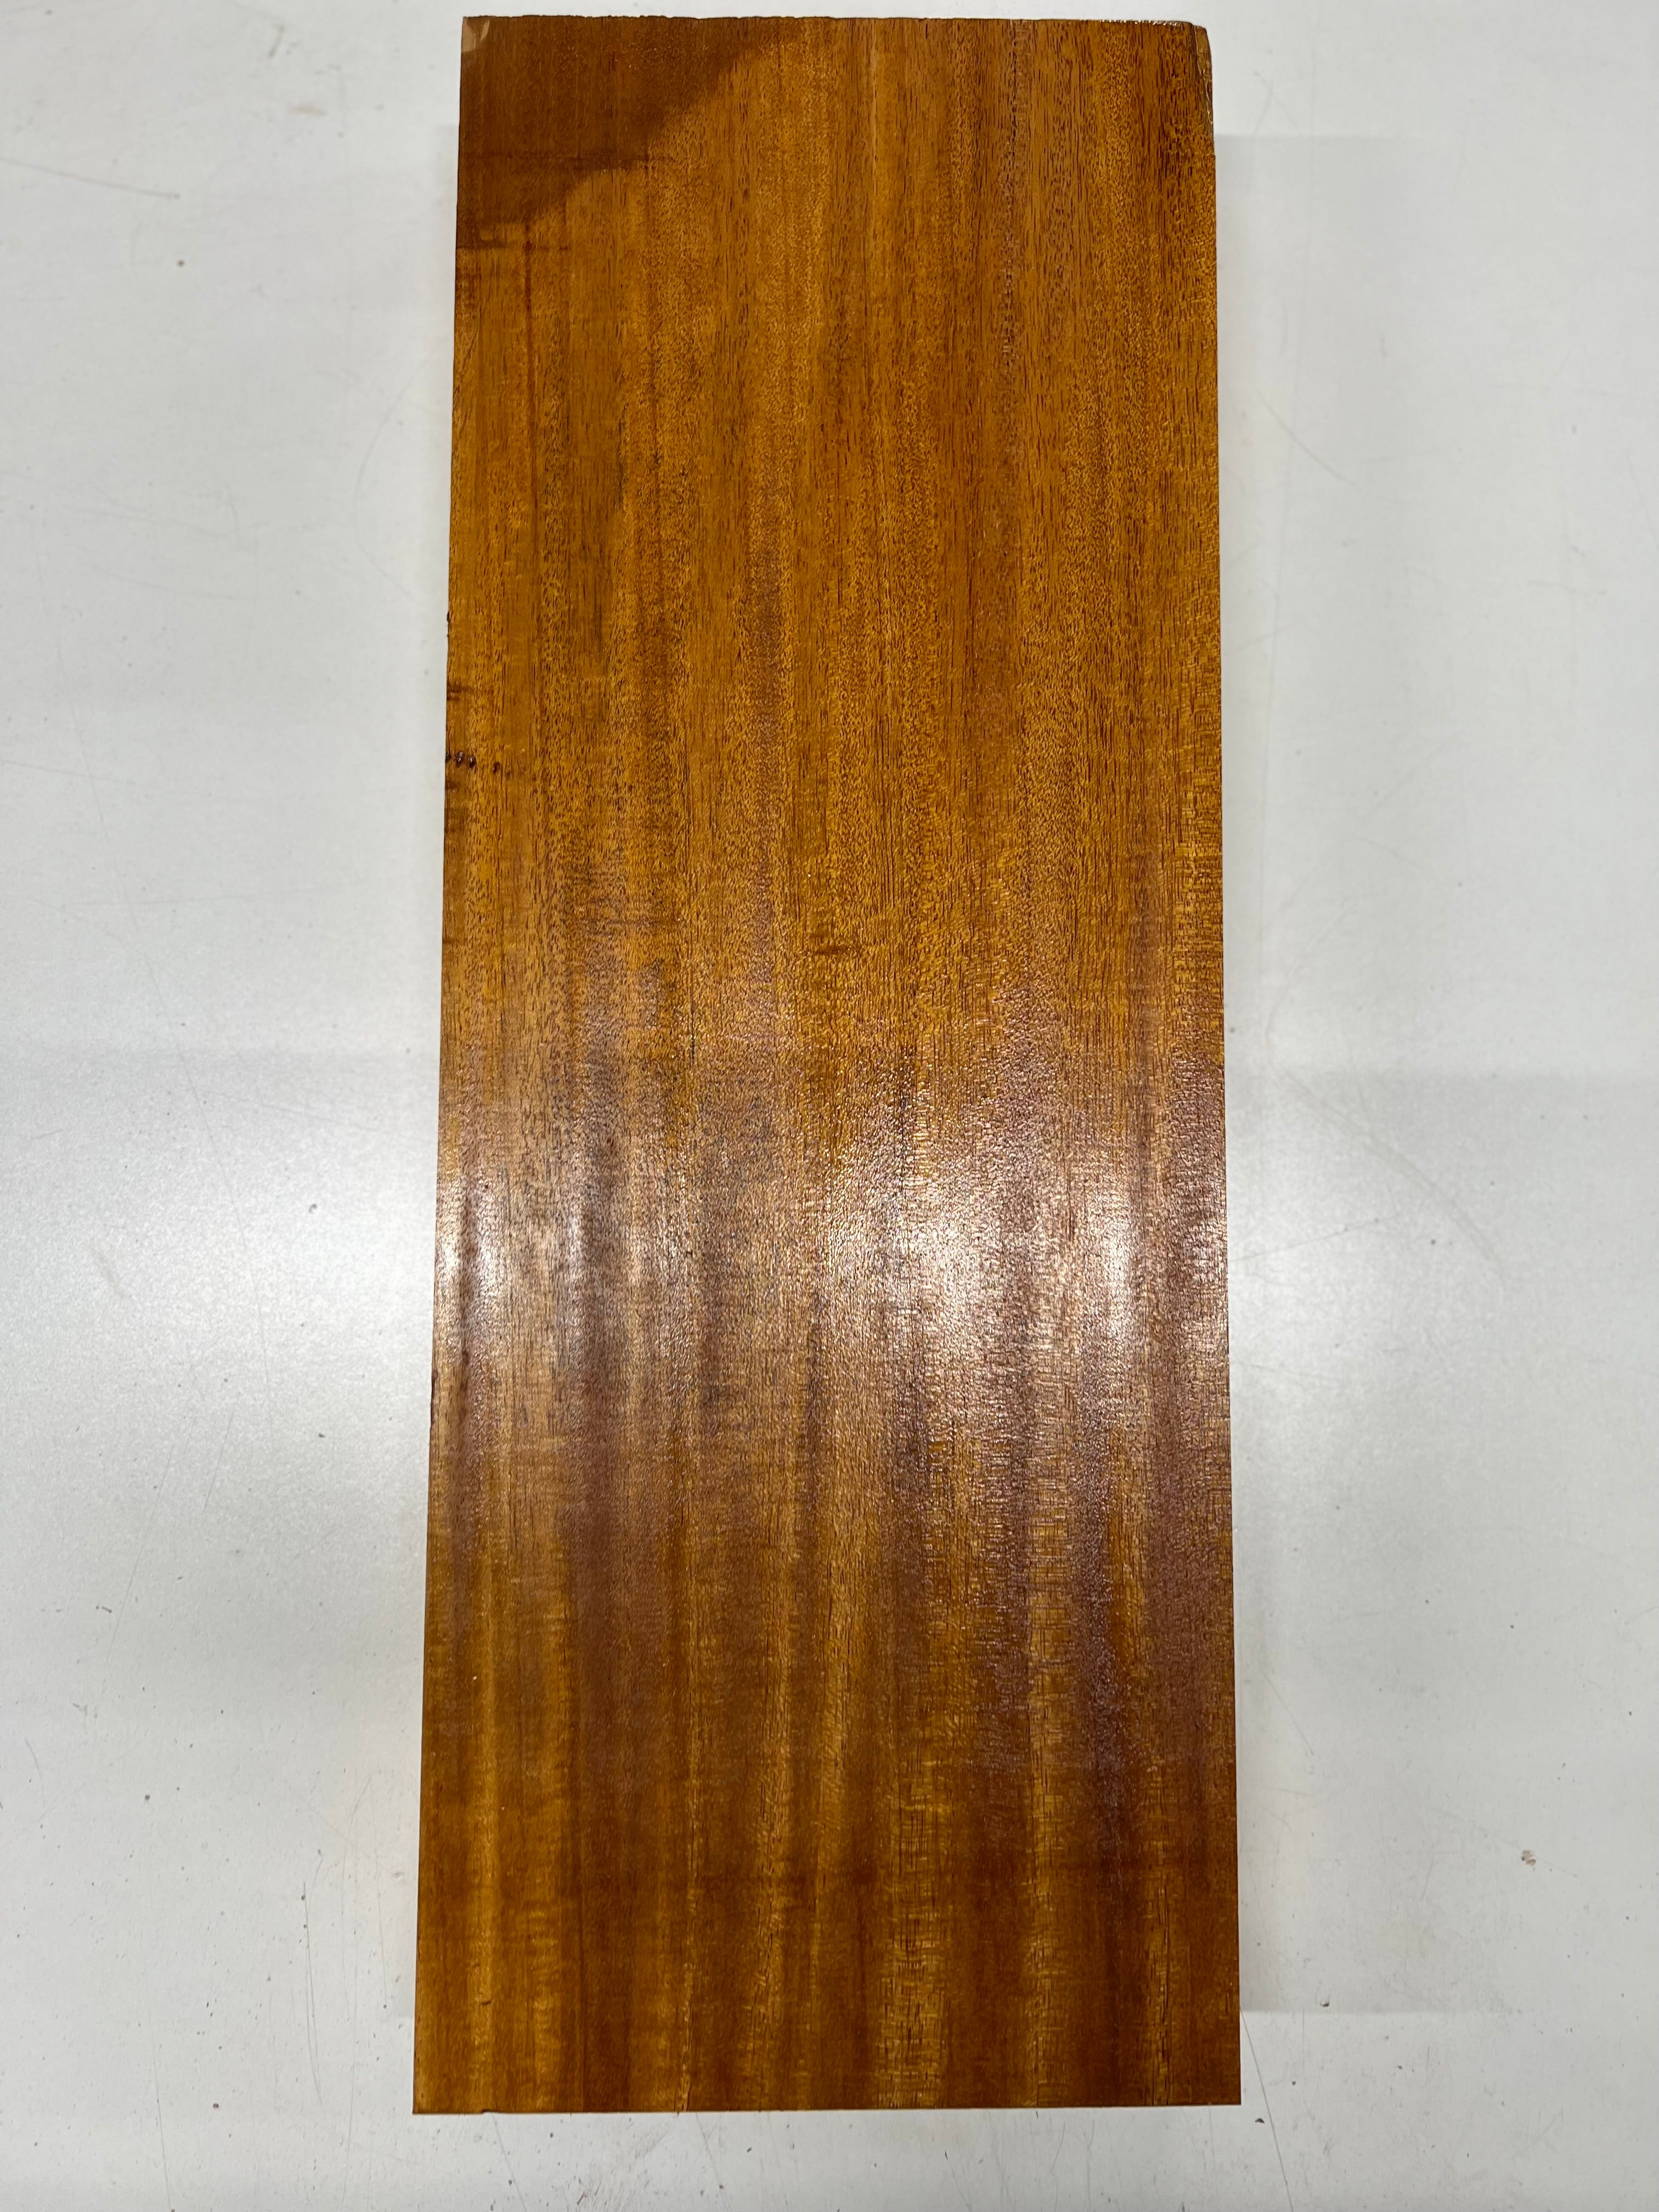 Fijian Mahogany Lumber Board Wood Blank 22&quot;x 8-1/4&quot;x 2-1/2&quot; 